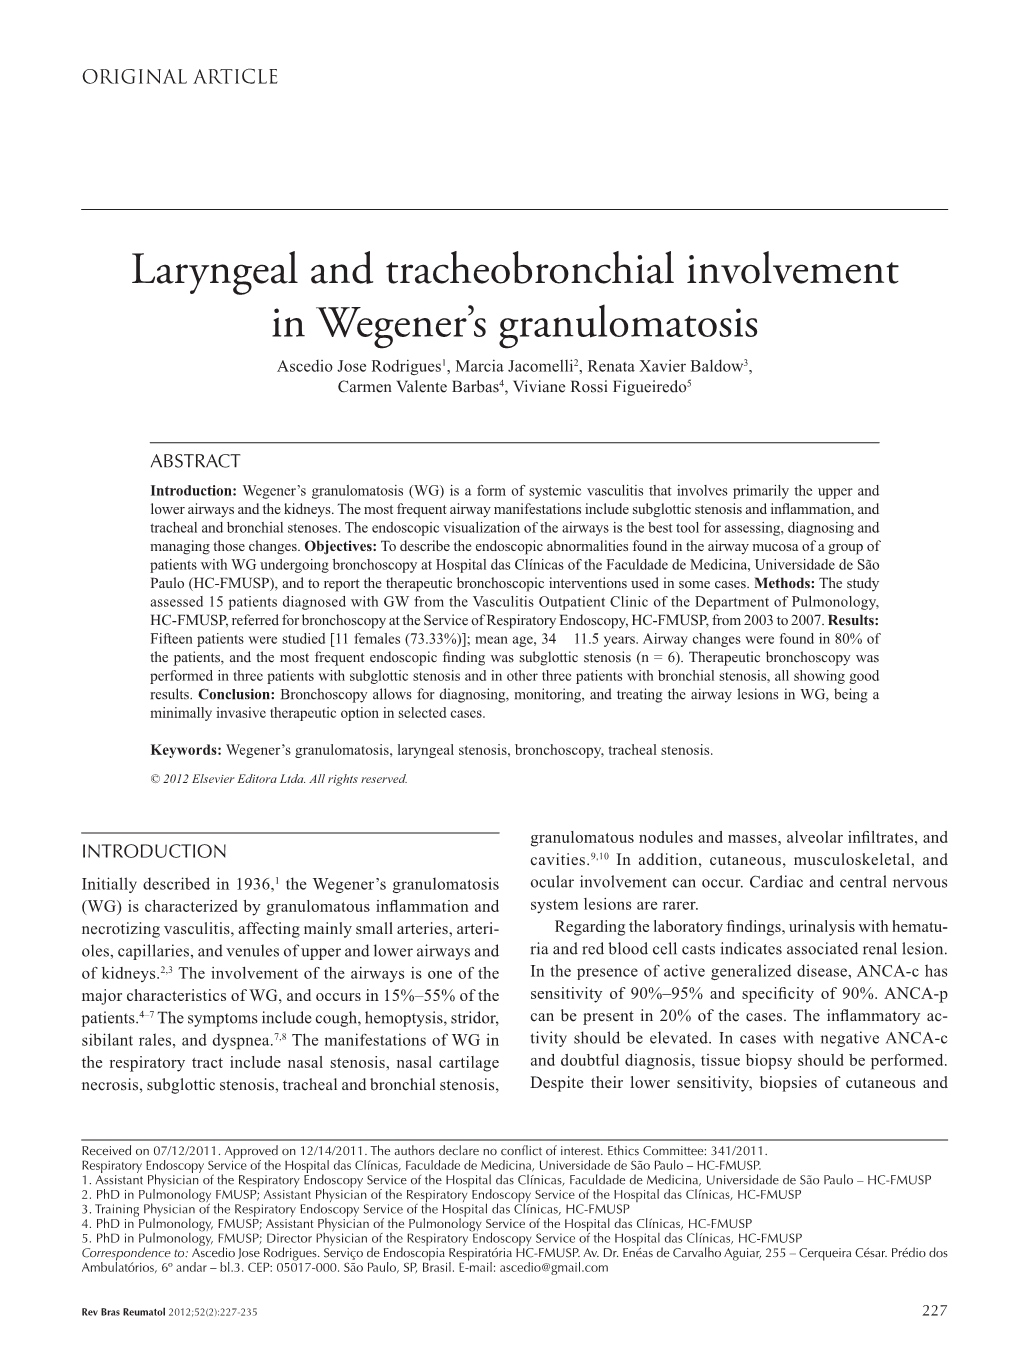 Laryngeal and Tracheobronchial Involvement in Wegener's